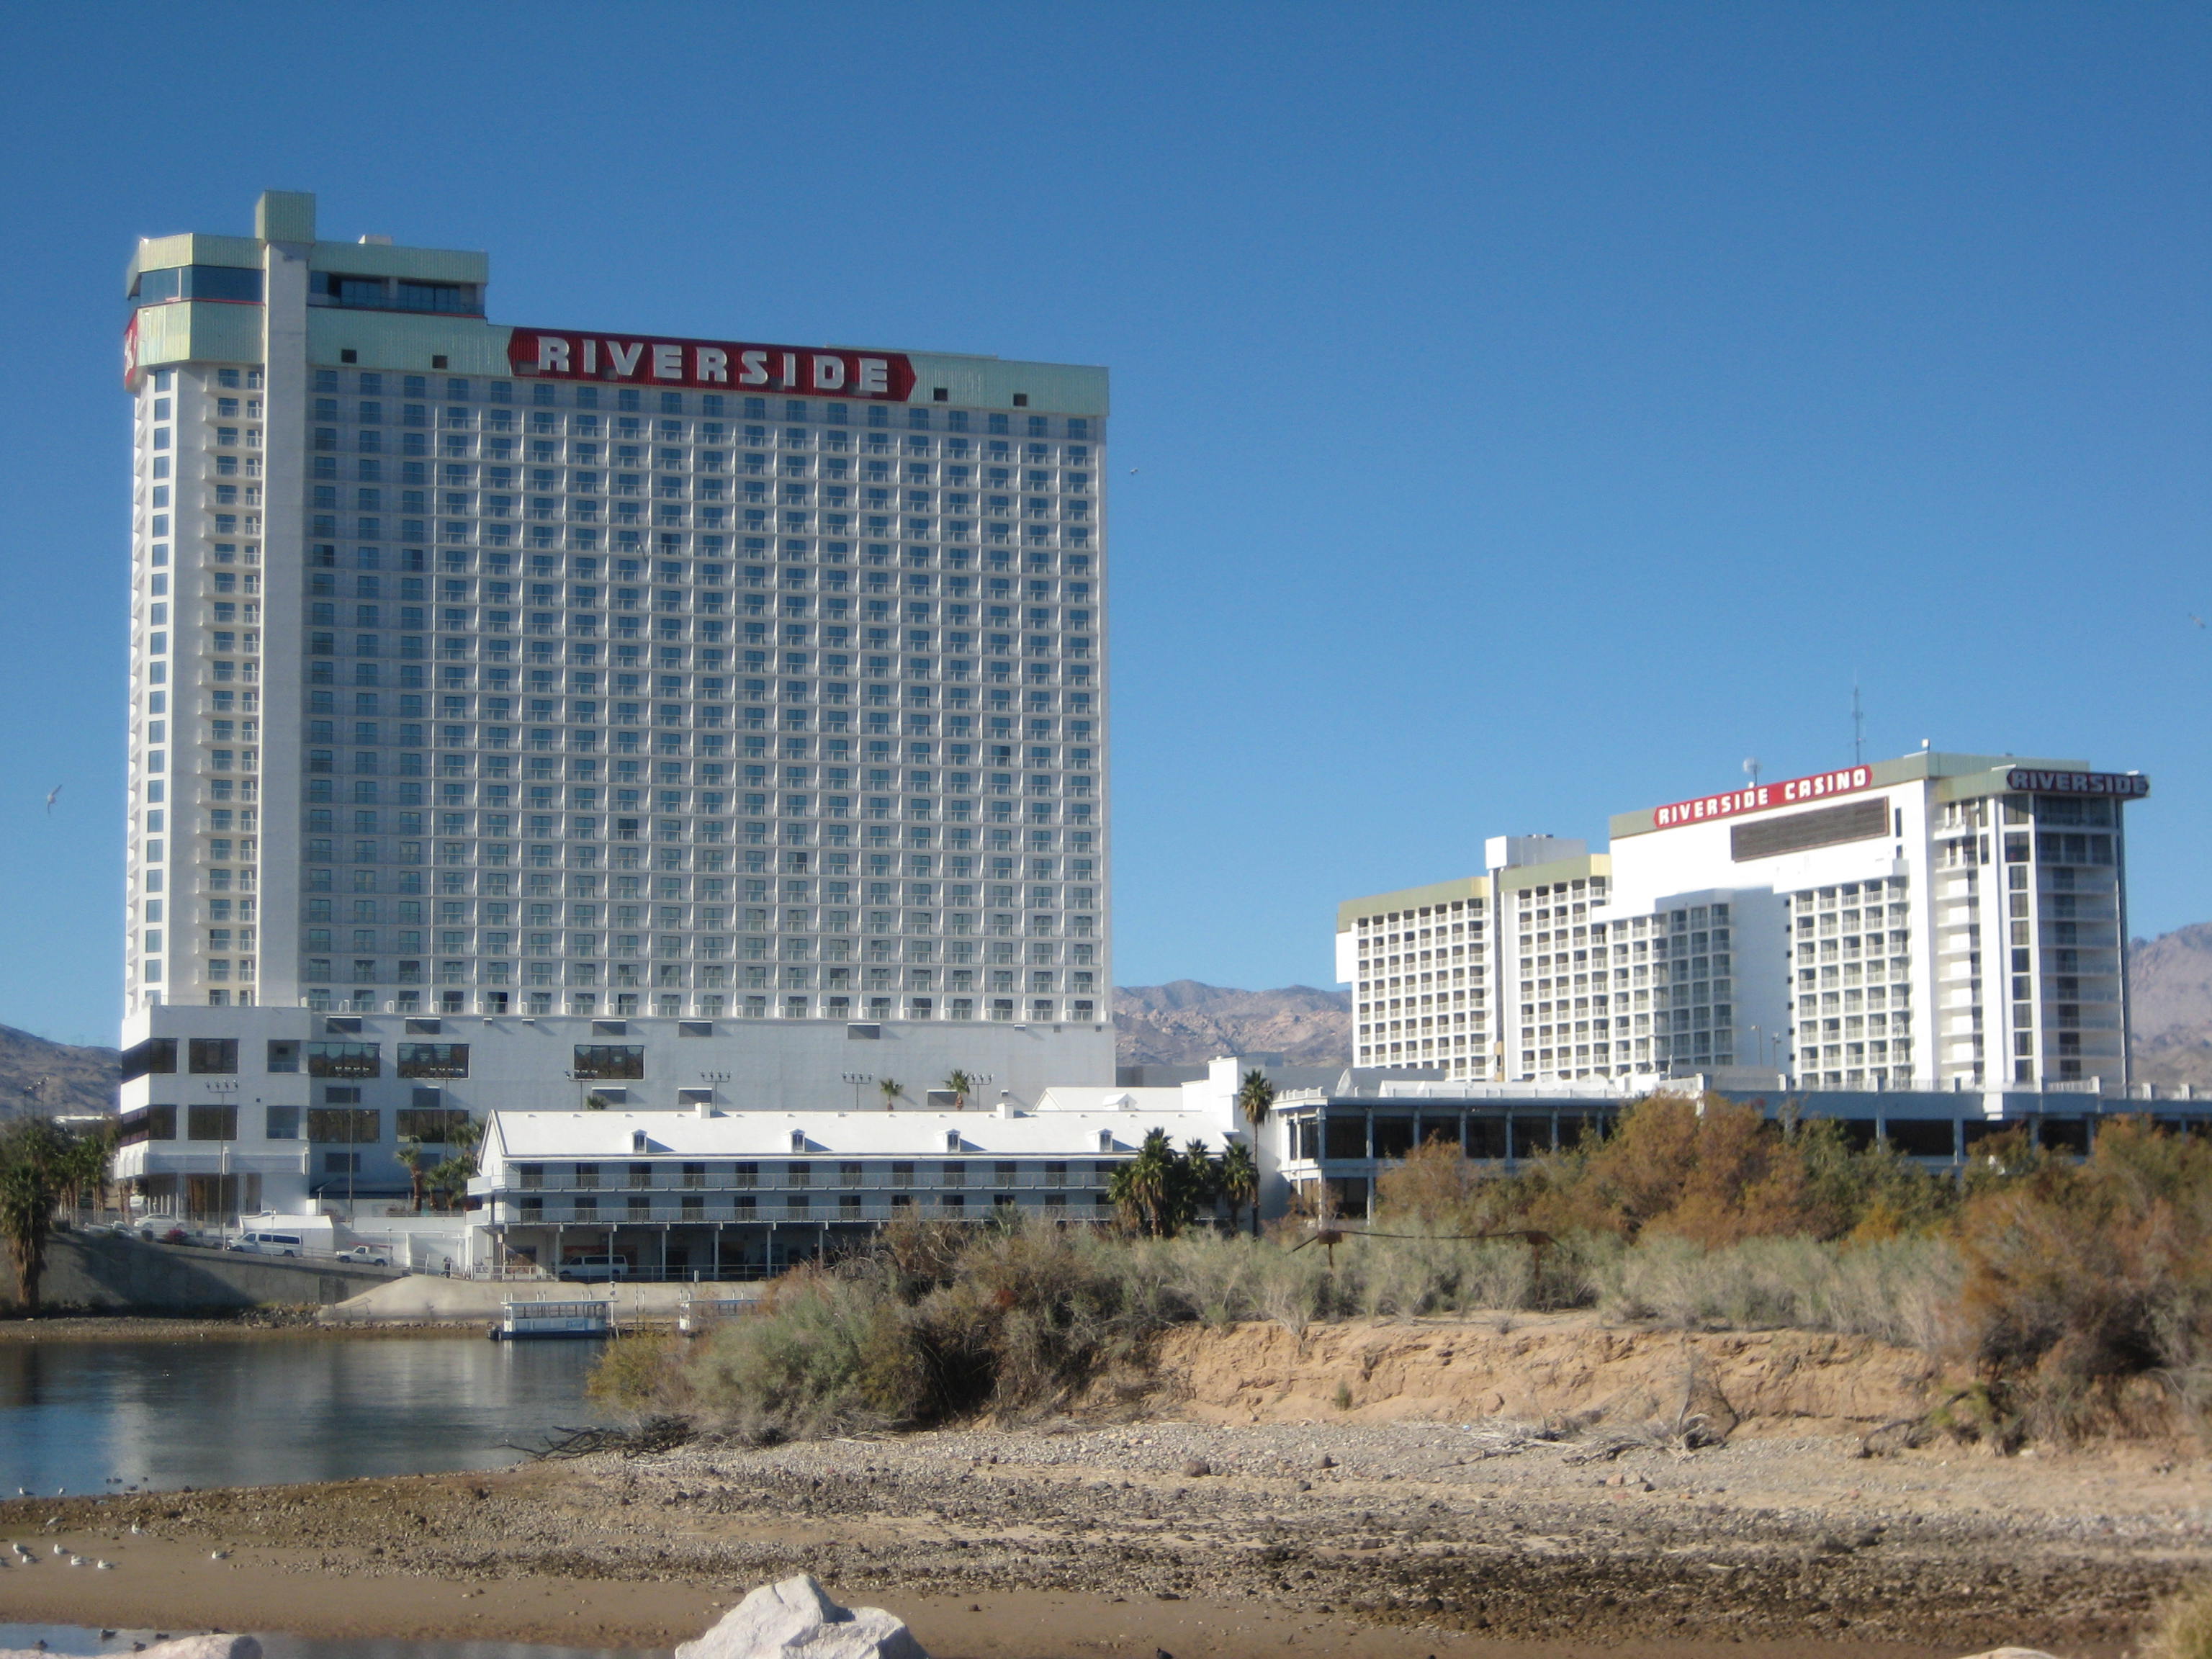 riverside hotel and casino in laughlin nevada